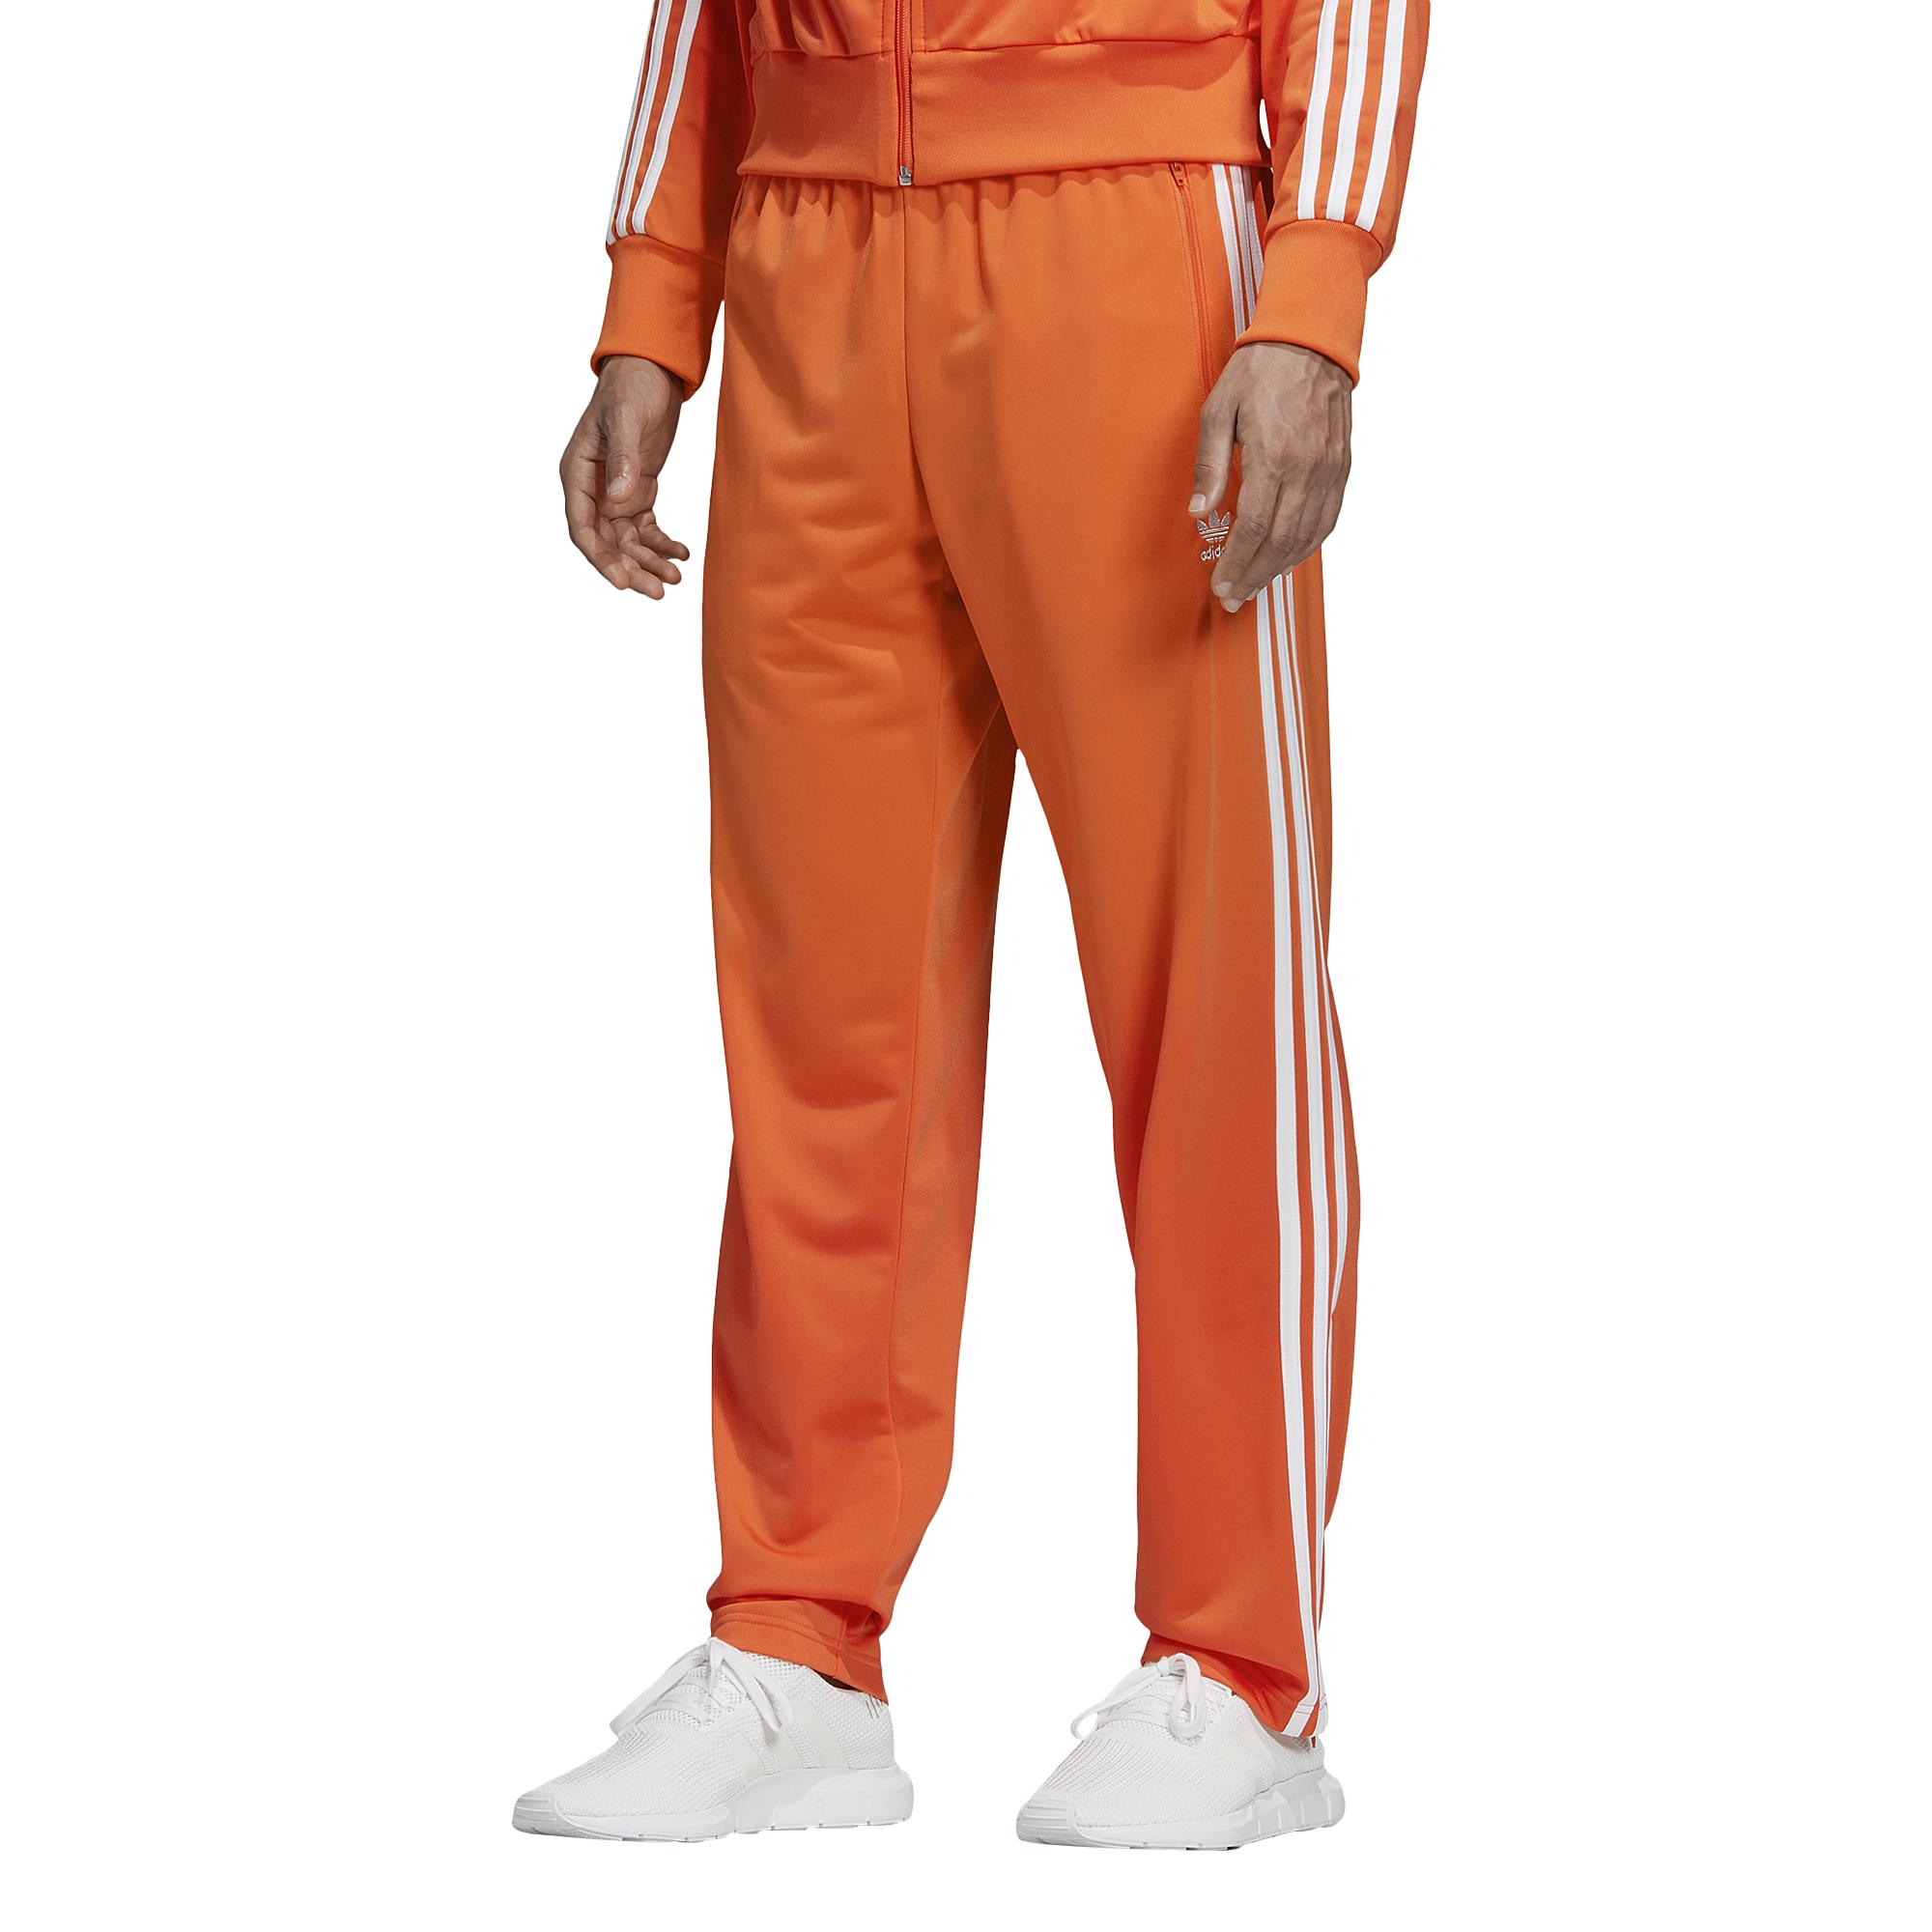 adidas Originals Synthetic Firebird Track Pants in Orange for Men - Lyst